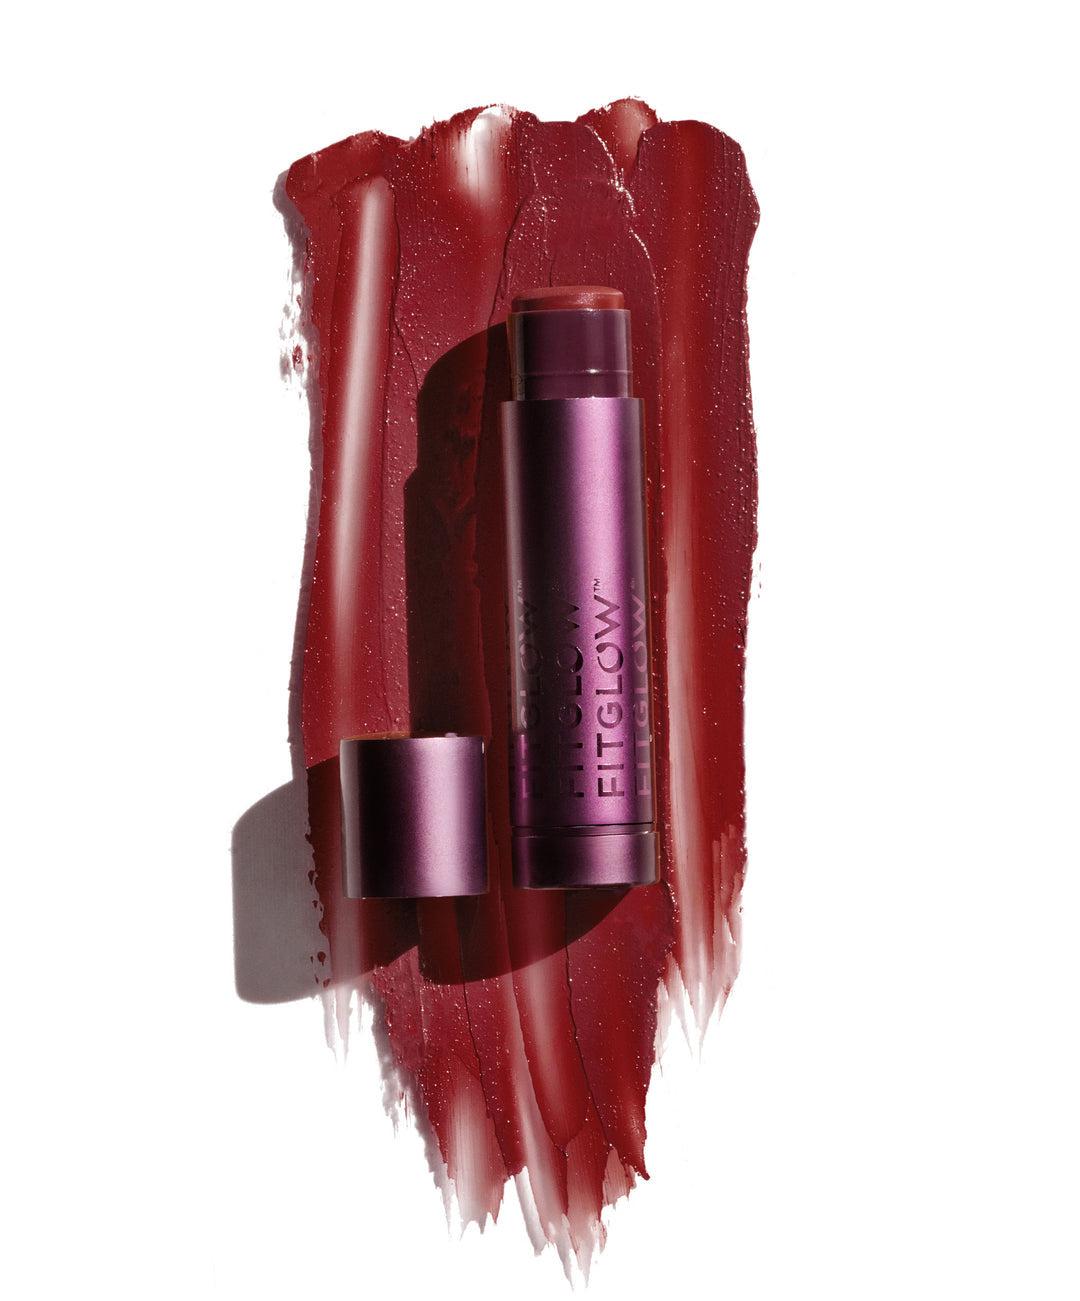 Fitglow Beauty - Cloud Collagen Lipstick + Cheek Balm - The Bare Theory